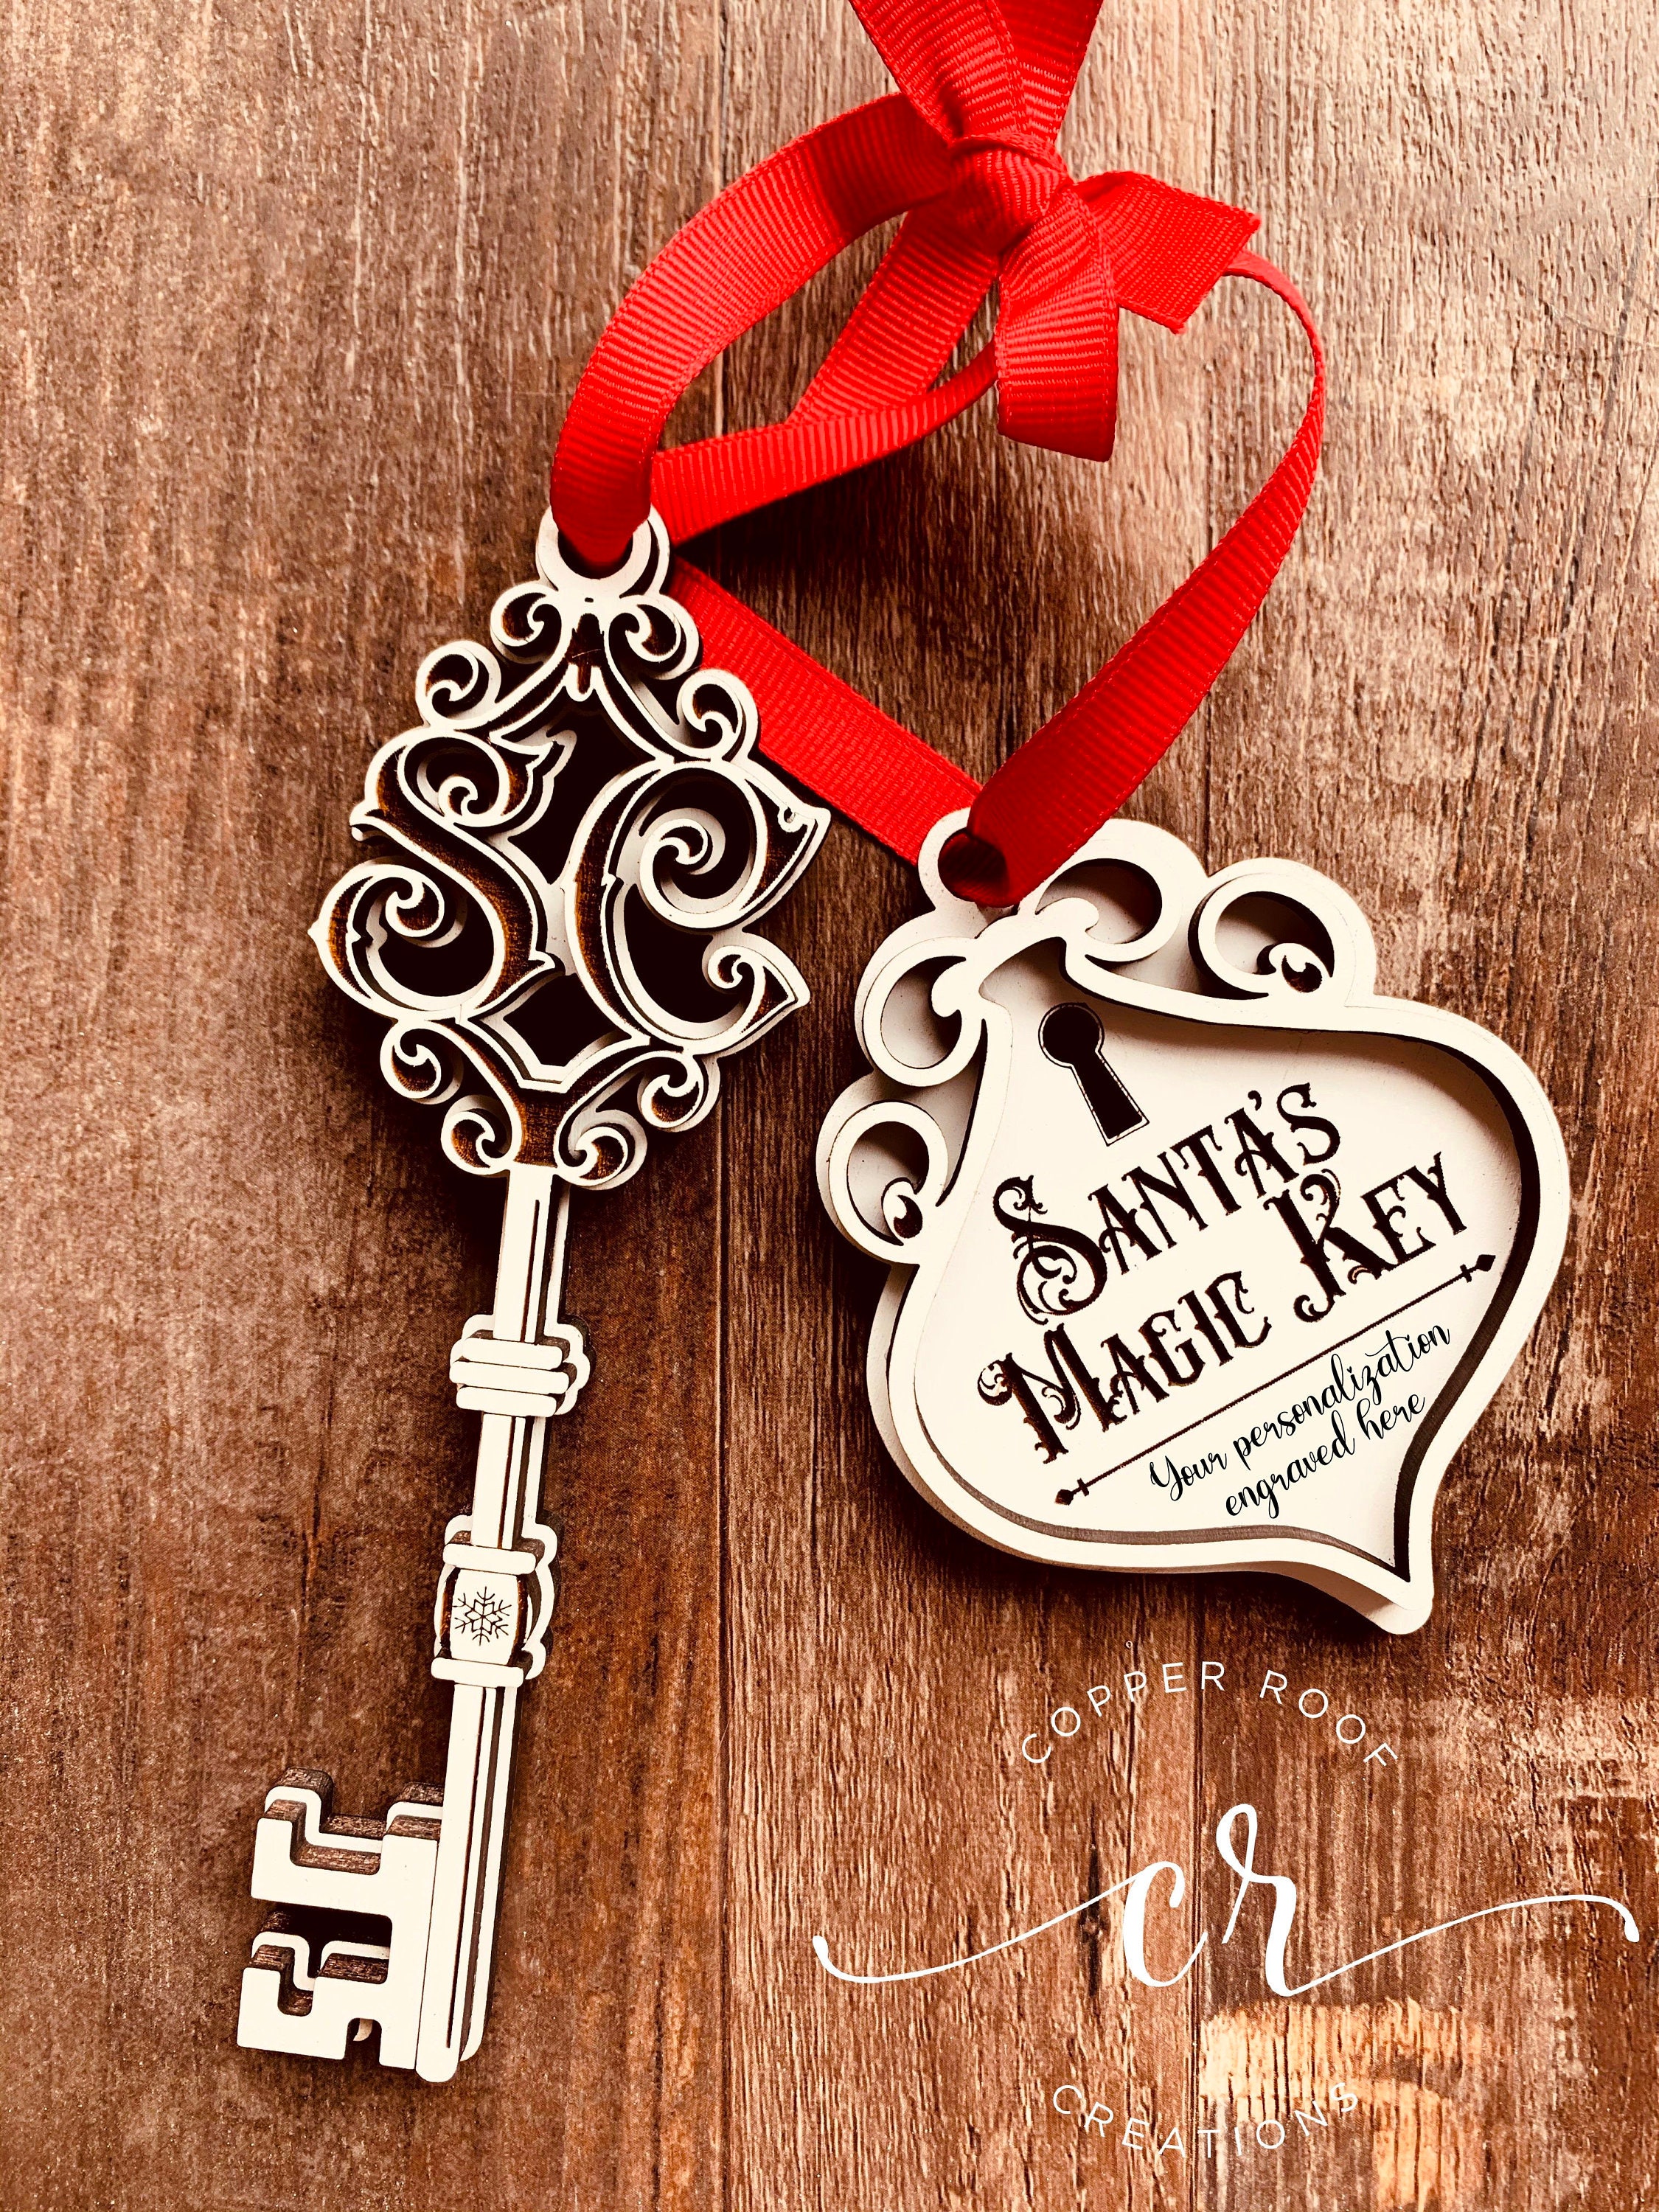 Santa's Magic Key Ornament – Blue Daisy Dreamer